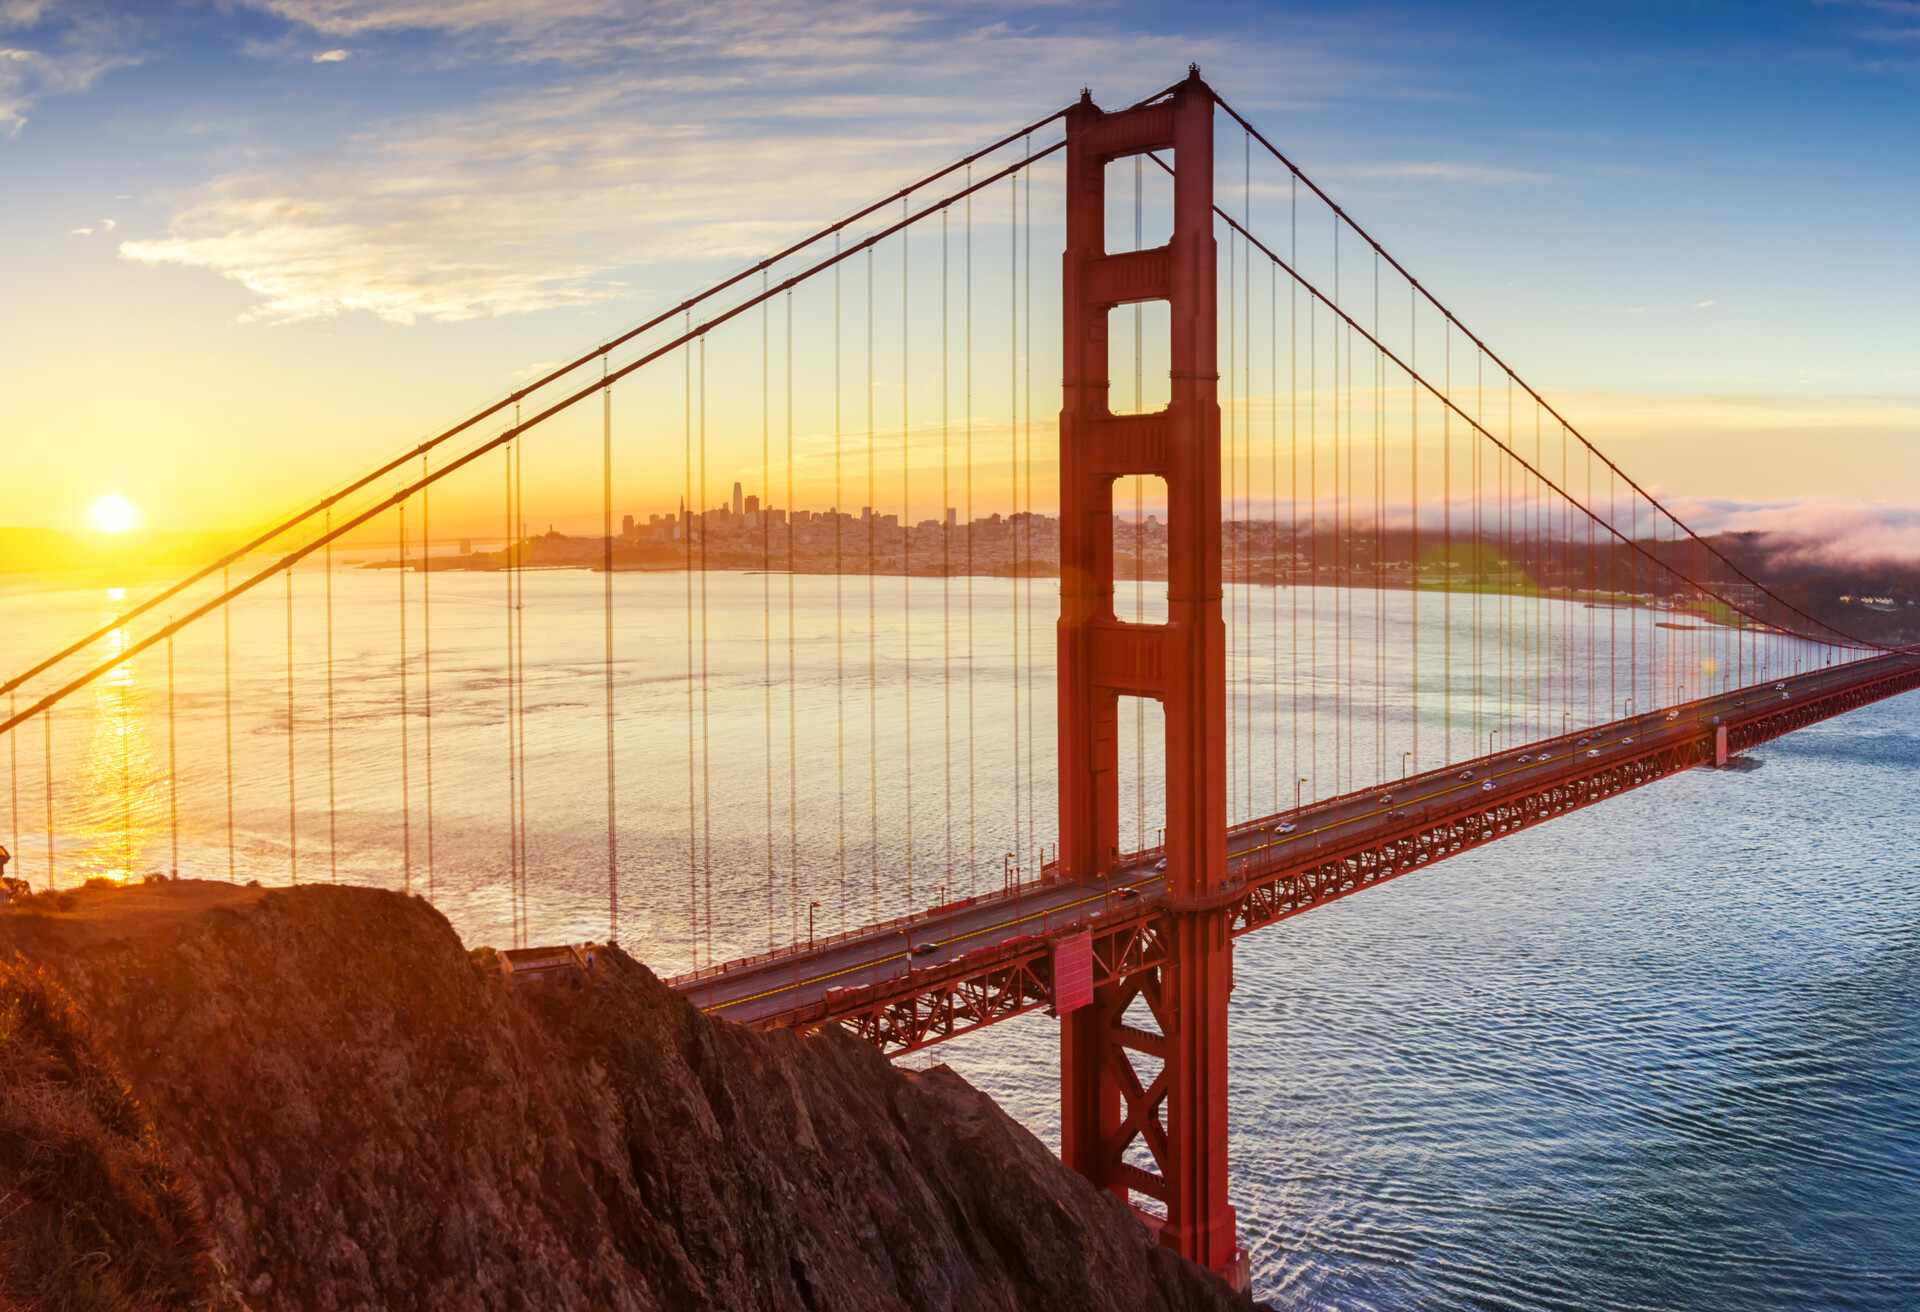 Panoramic view of Golden Gate bridge at sunrise in San Francisco, California. United States